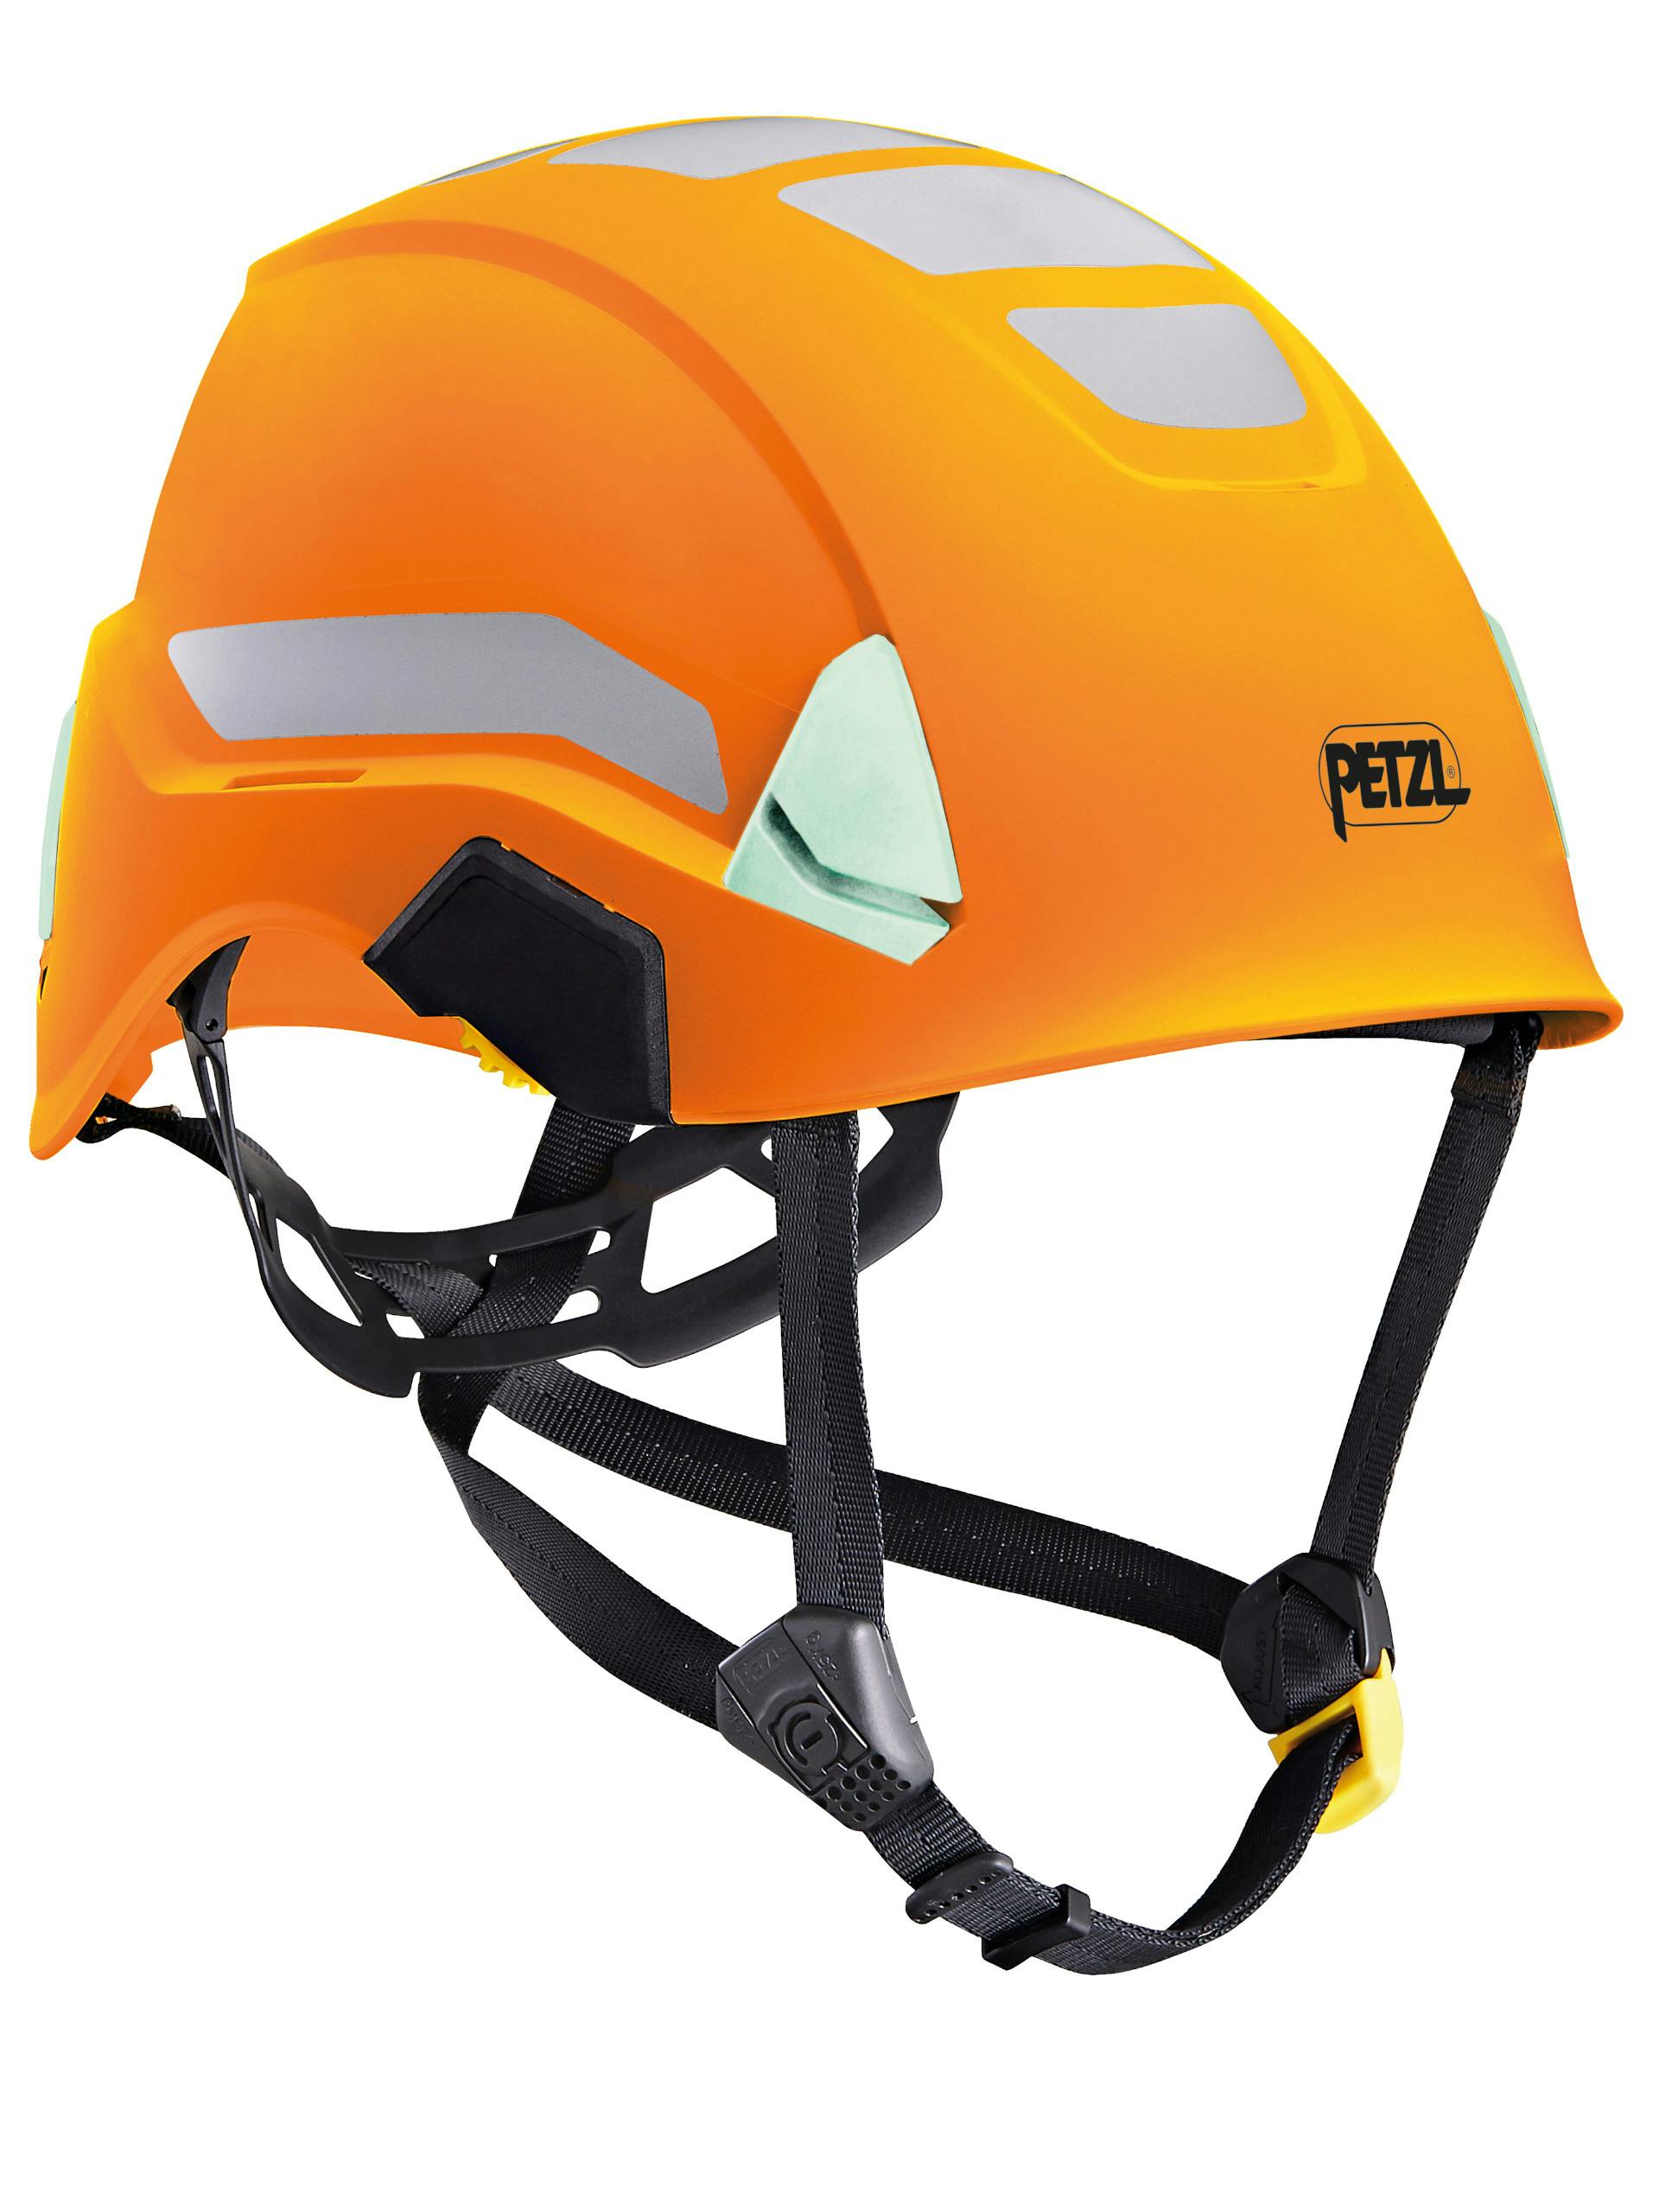 Petzl Strato Hi-Viz helmet